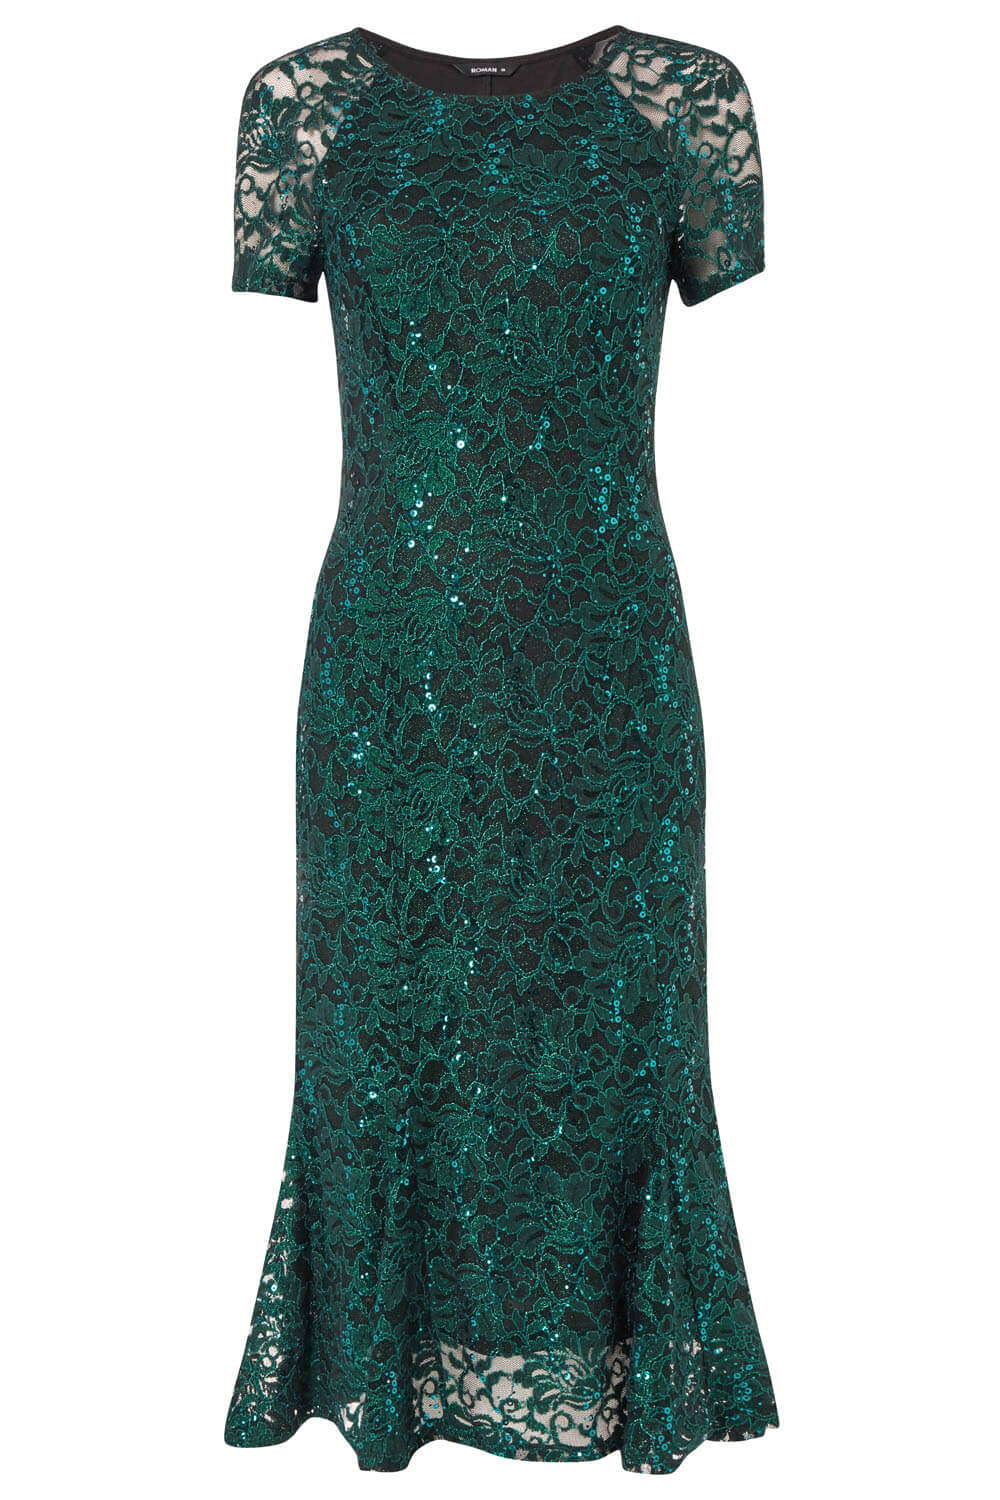 Green Metallic Lace Sequin Midi Dress, Image 5 of 5